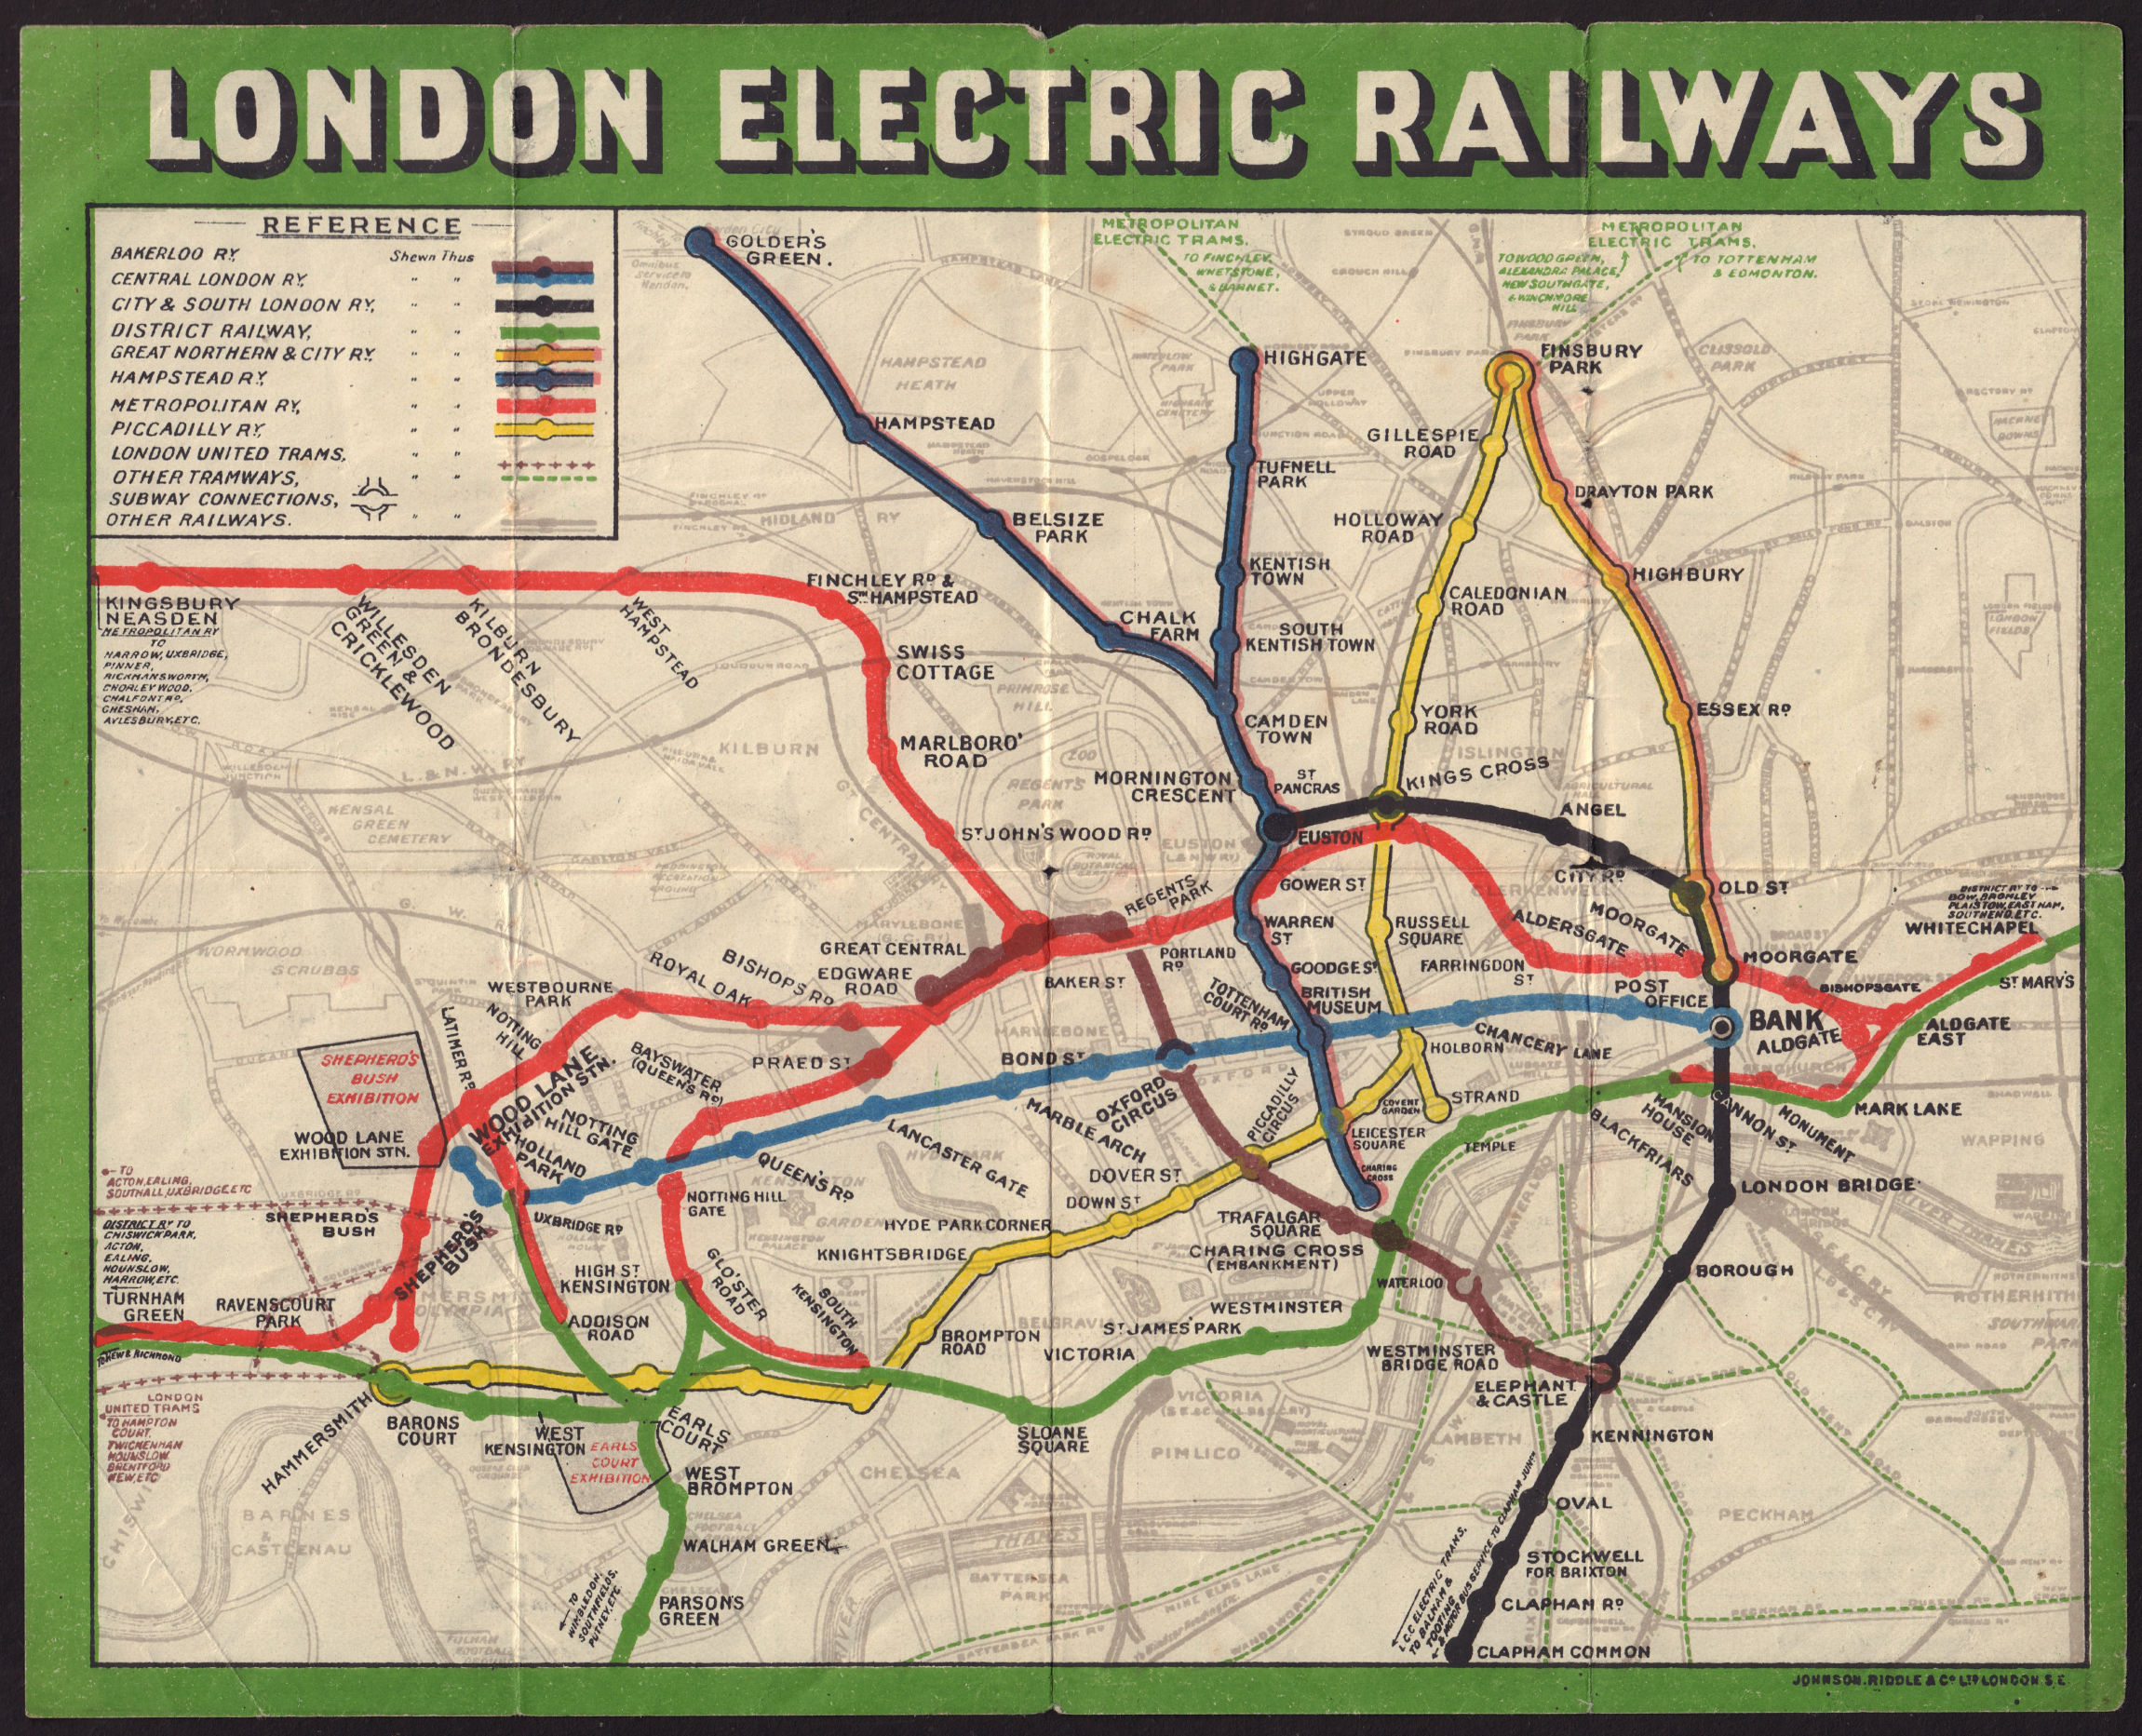 London Electric Railways. Underground tube network map 1909 old antique